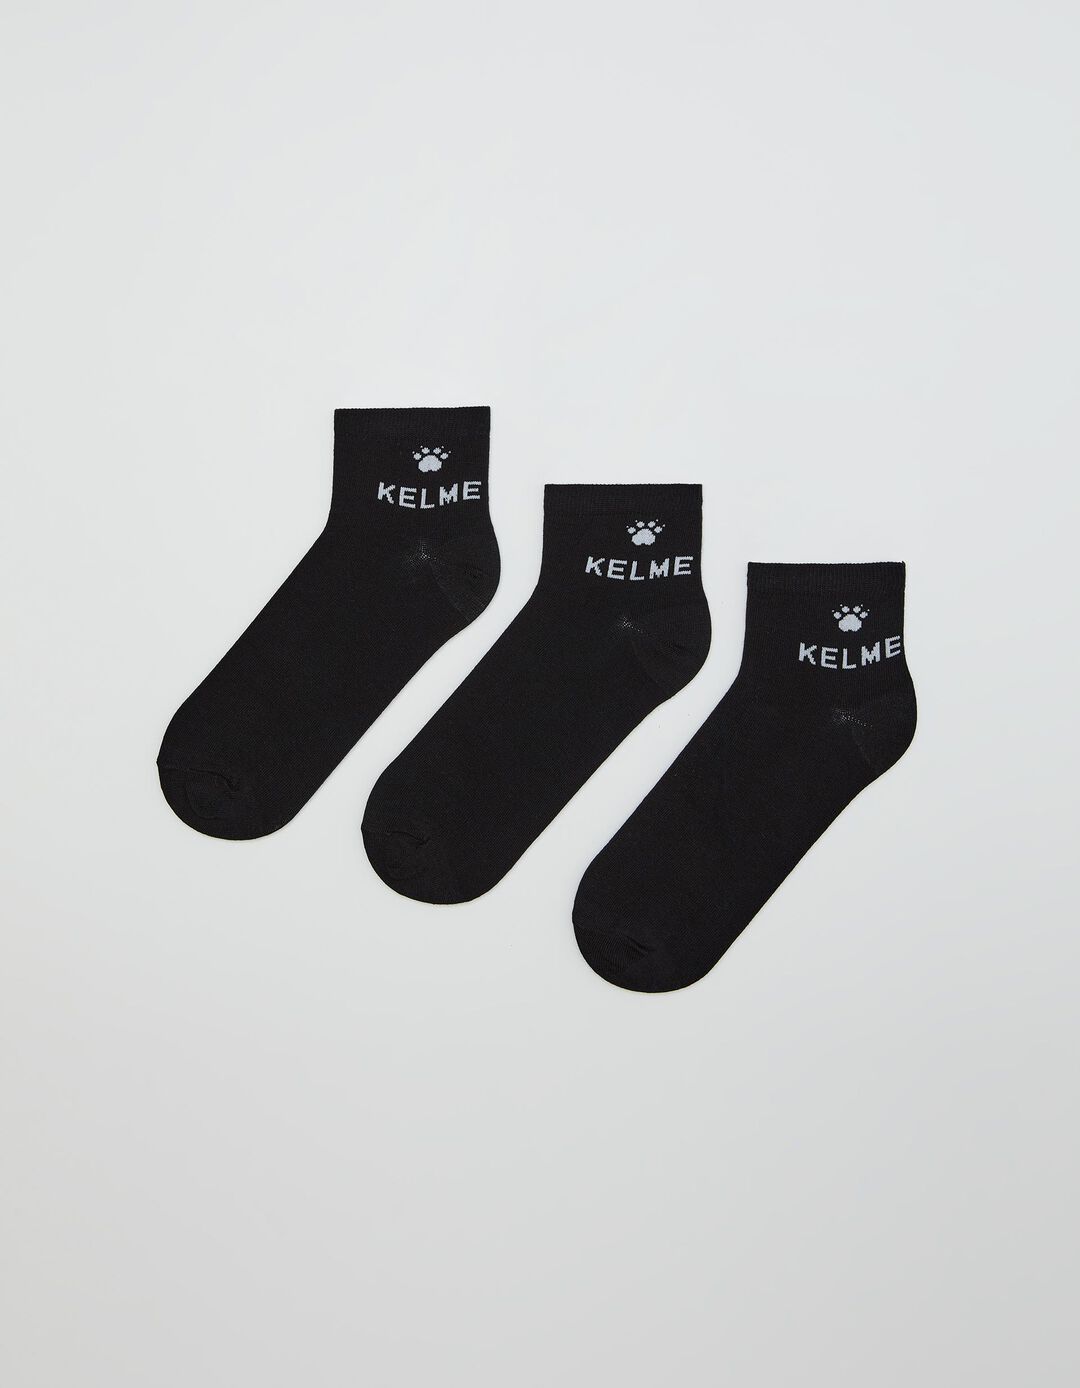 3 'Kelme' Socks Pairs Pack, Men, Black